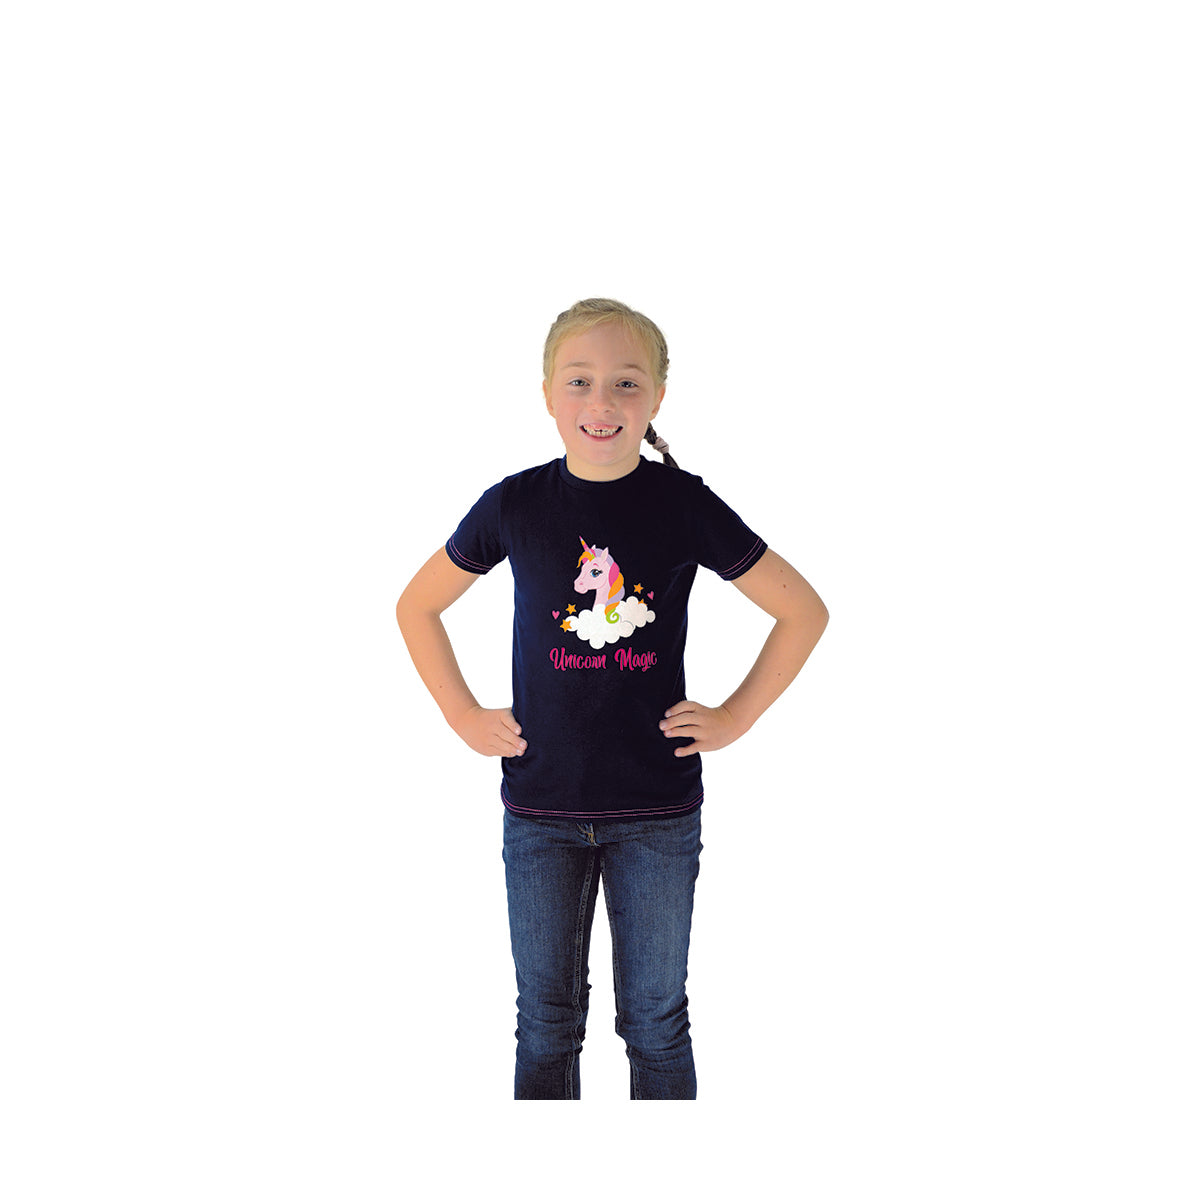 Unicorn Magic T-shirt van Little Rider